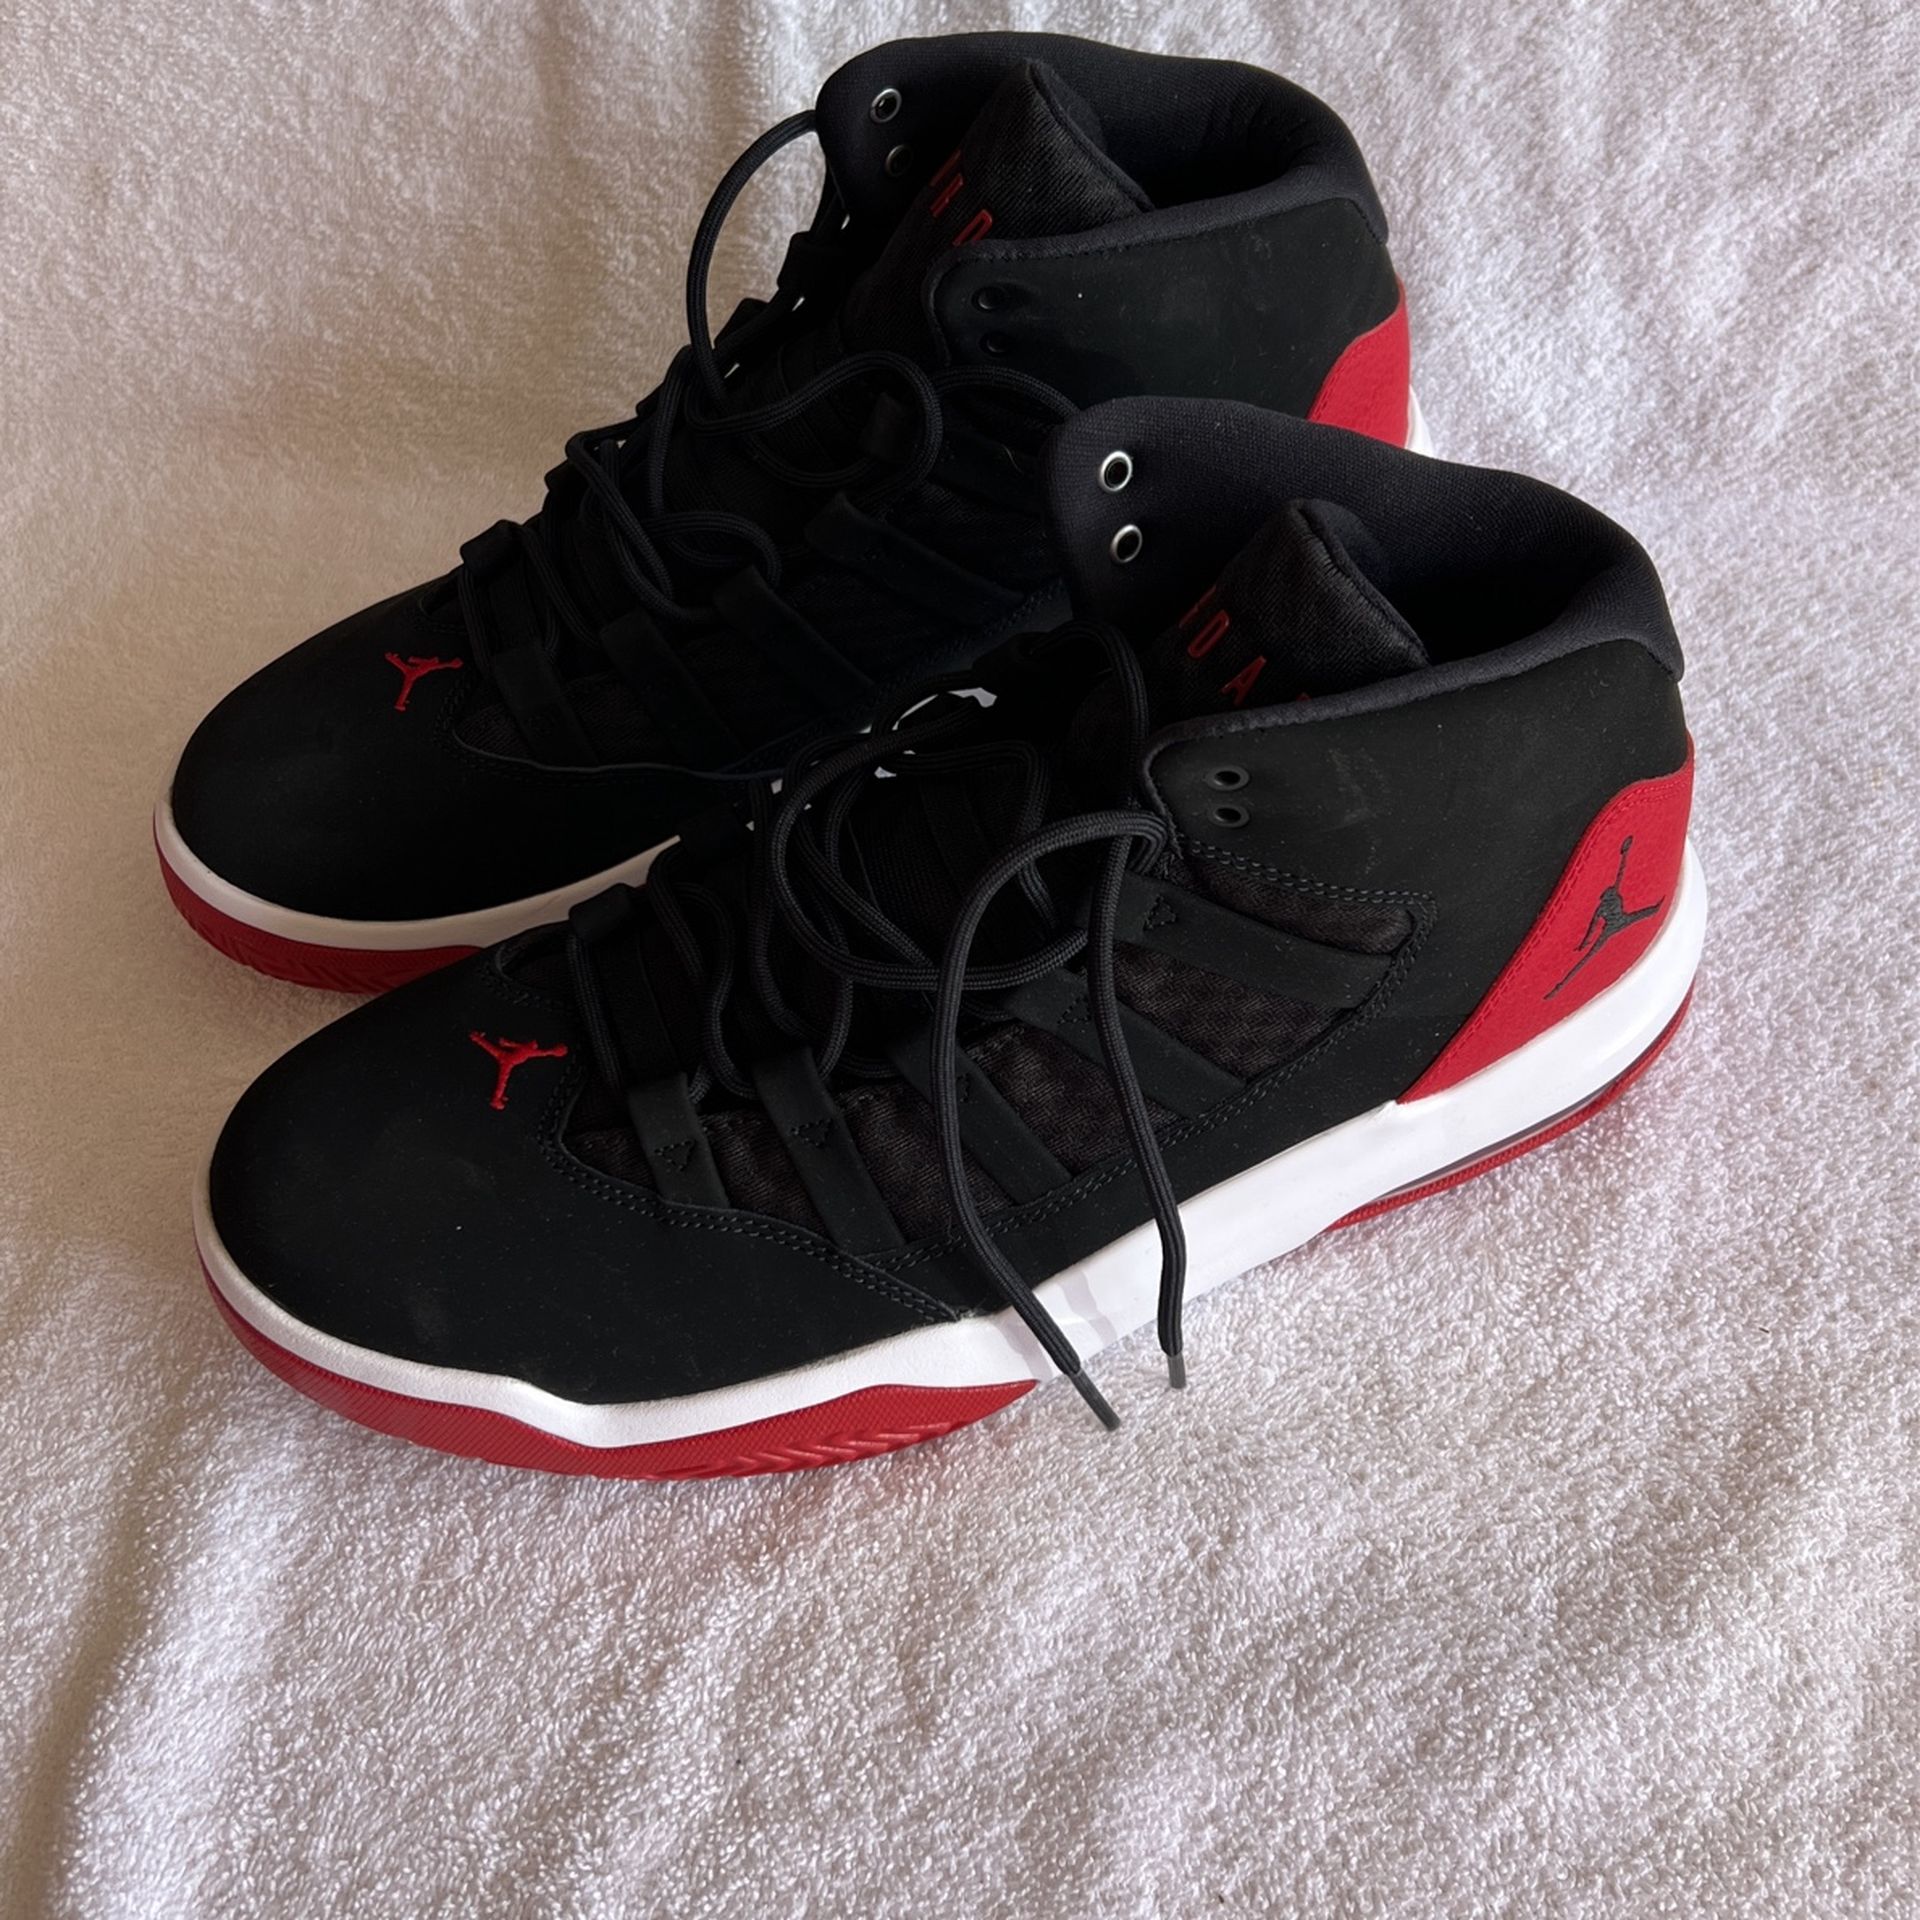 Nike Jordan’s Size 12